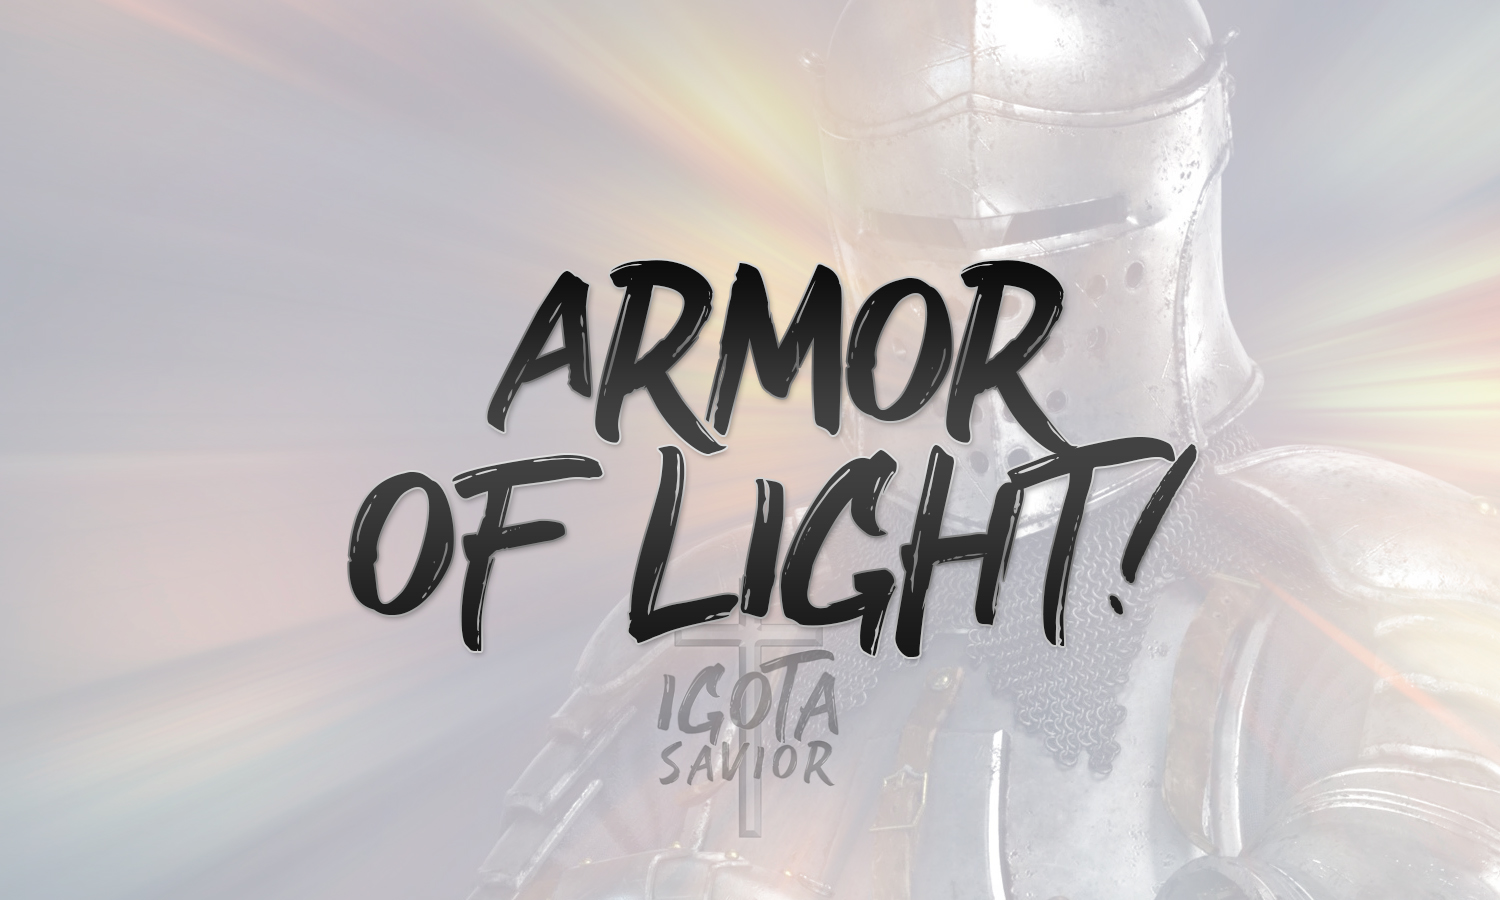 Armor Of Light!